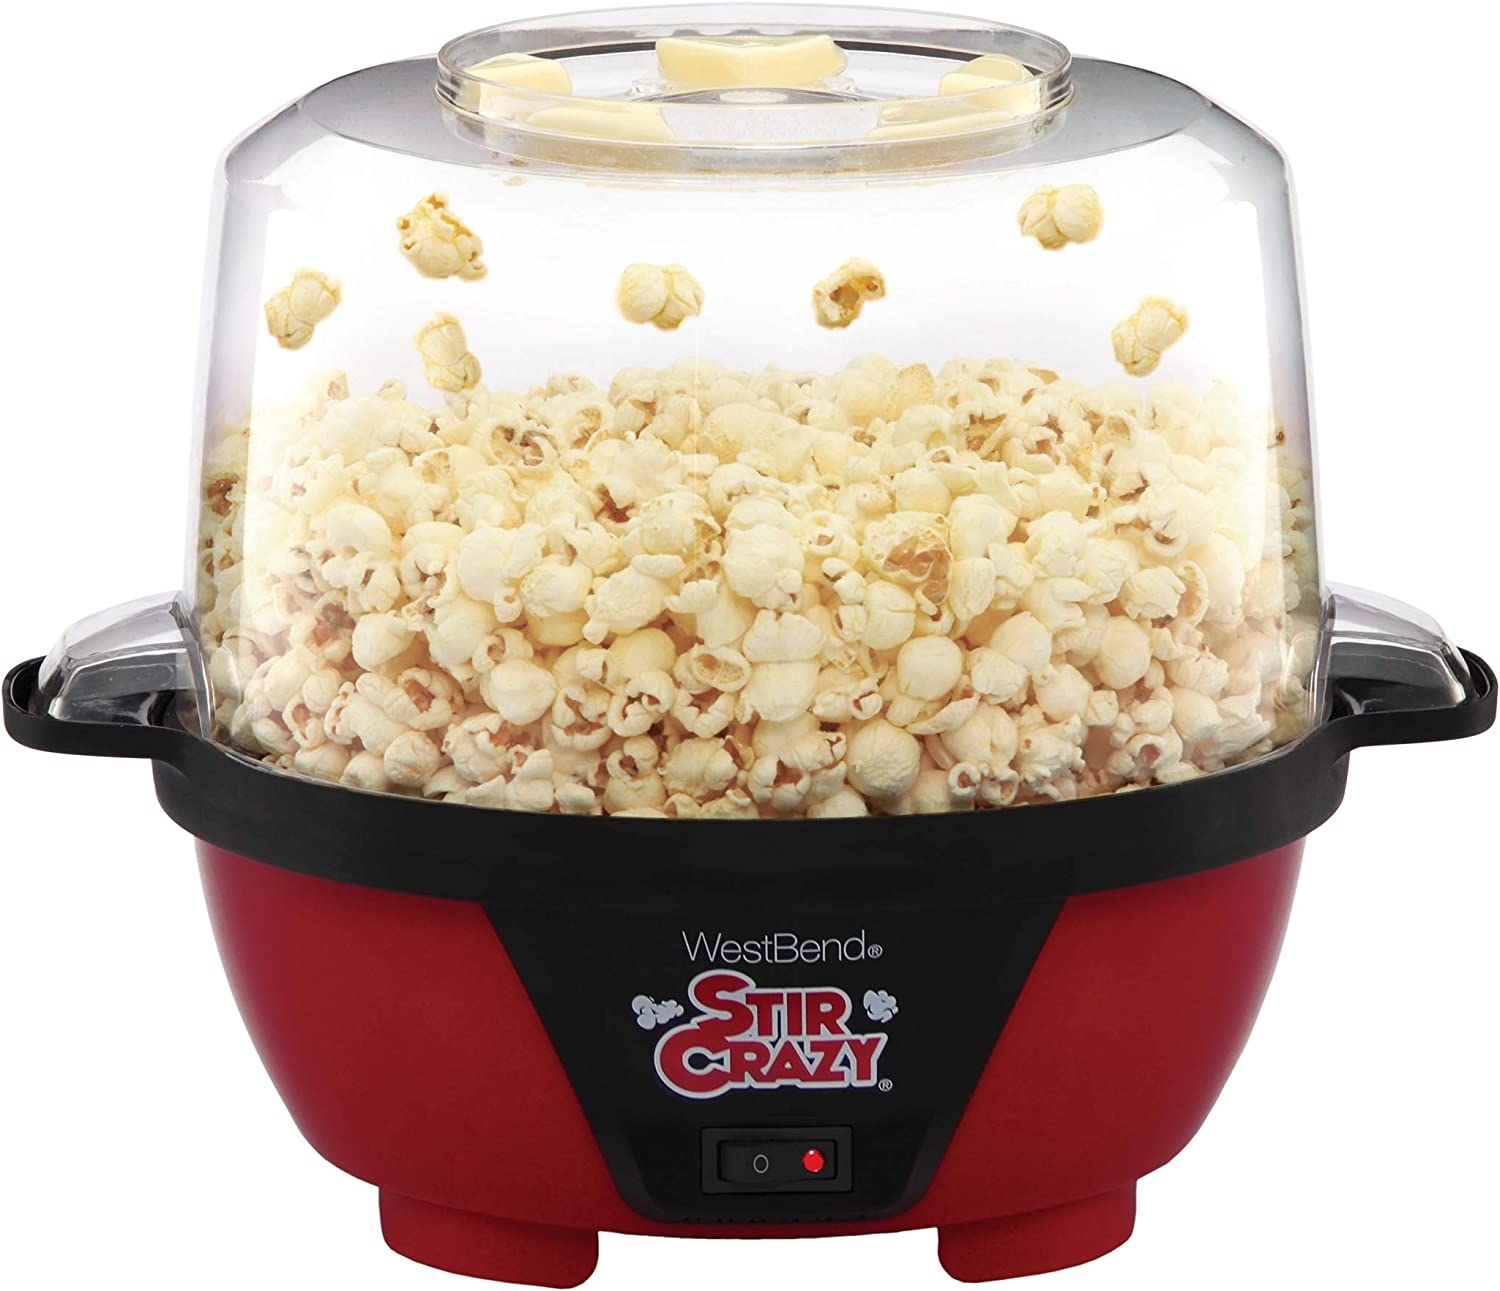 West Bend Stir Crazy Popcorn Machine Electric Hot Oil Popper Includes Large Lid for Serving Bowl and Convenient Nesting Storage,